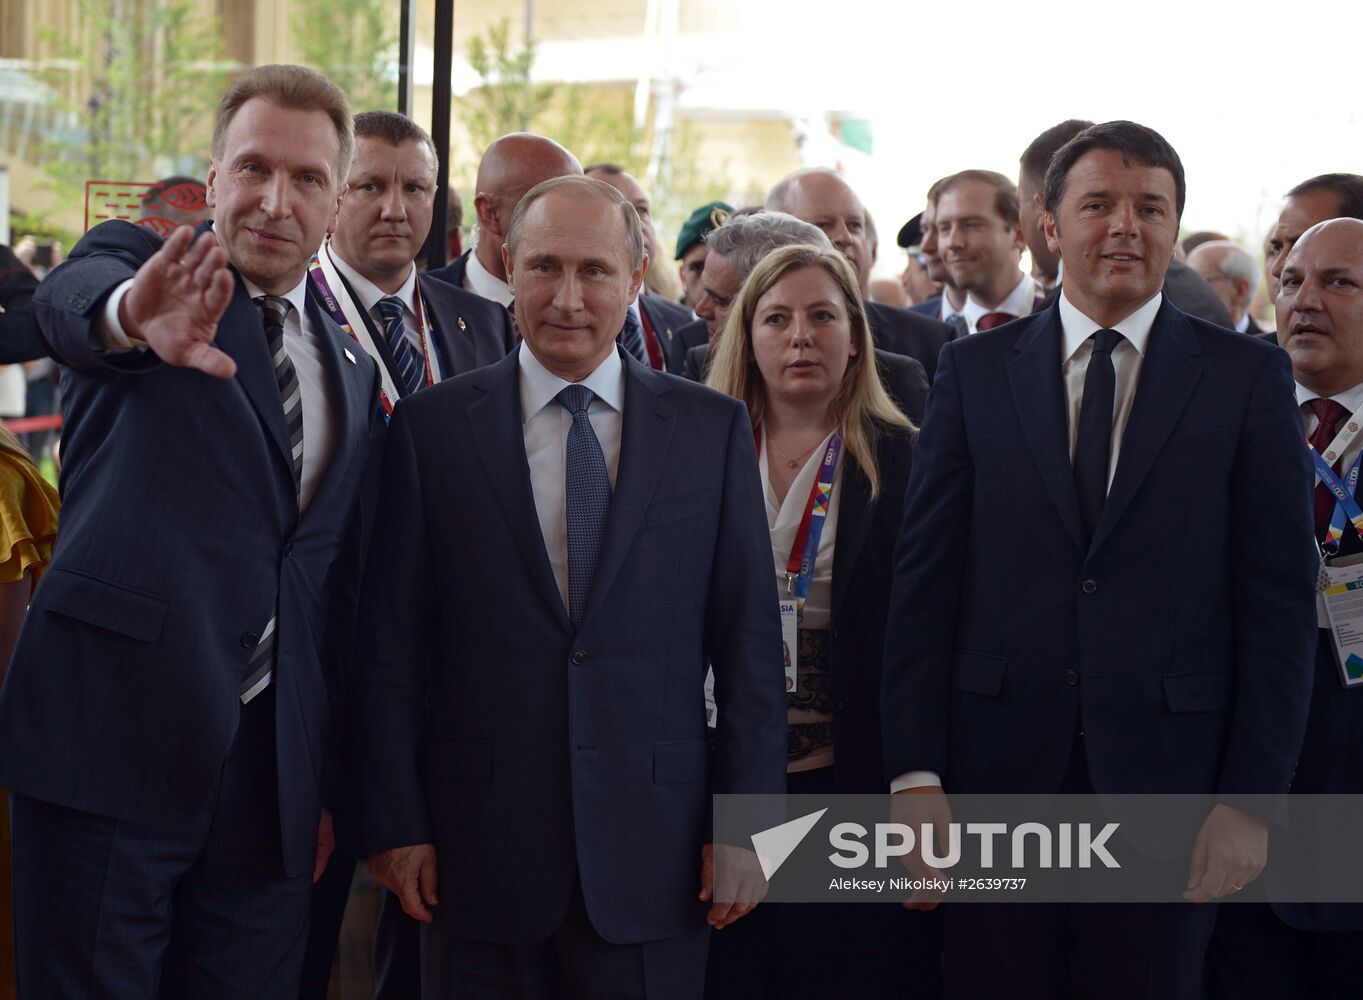 President Vladimir Putin's visit to Italy